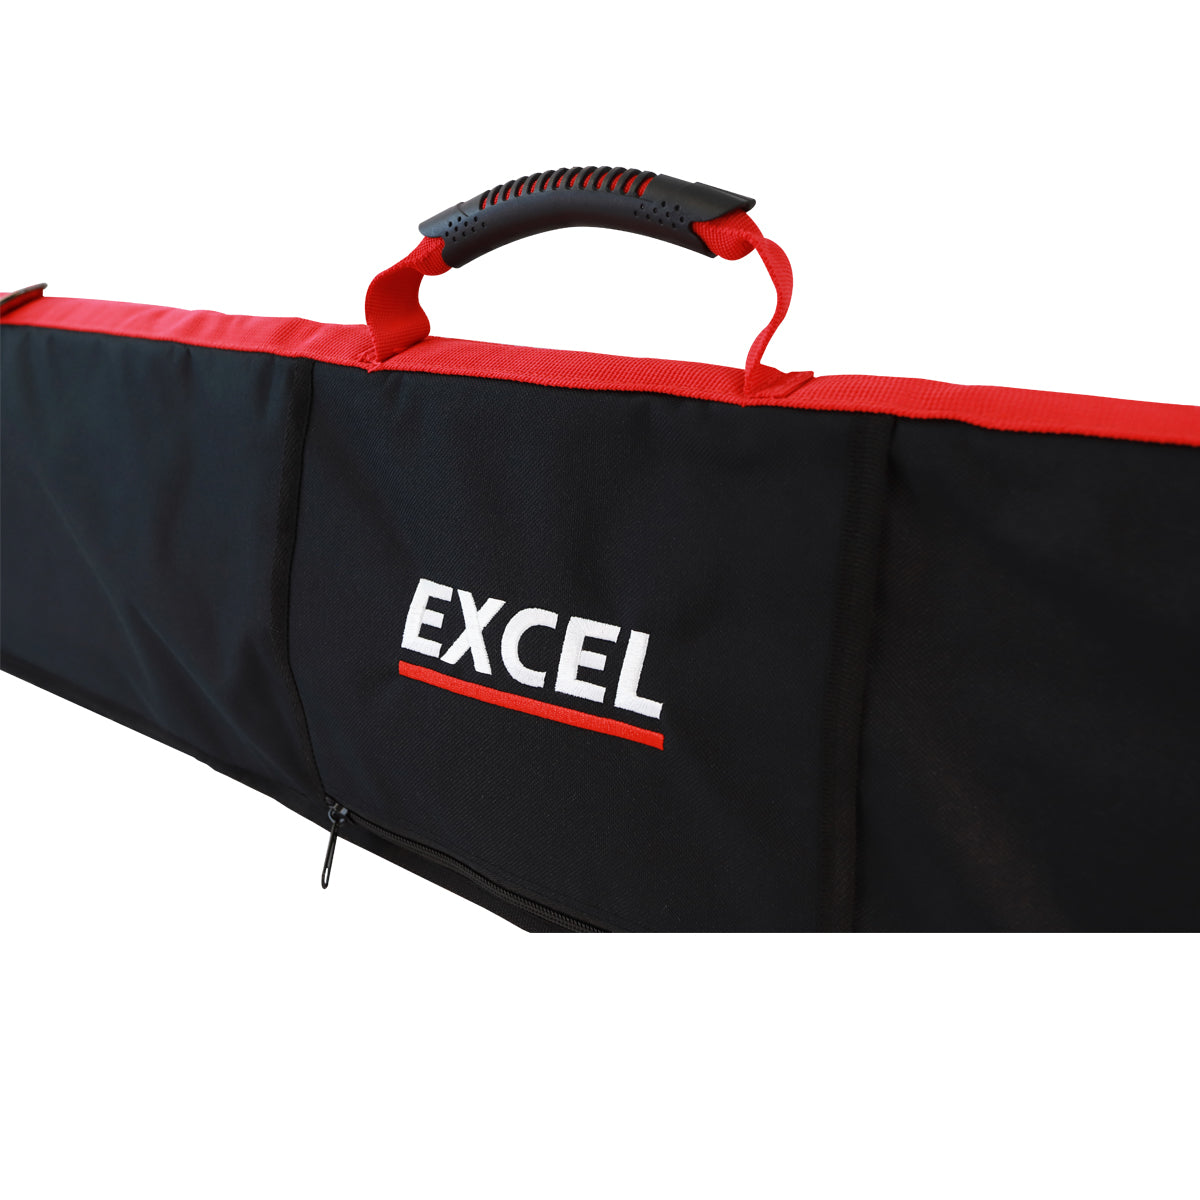 Excel 1.5M Guide Rail Bag Red for Makita DeWalt